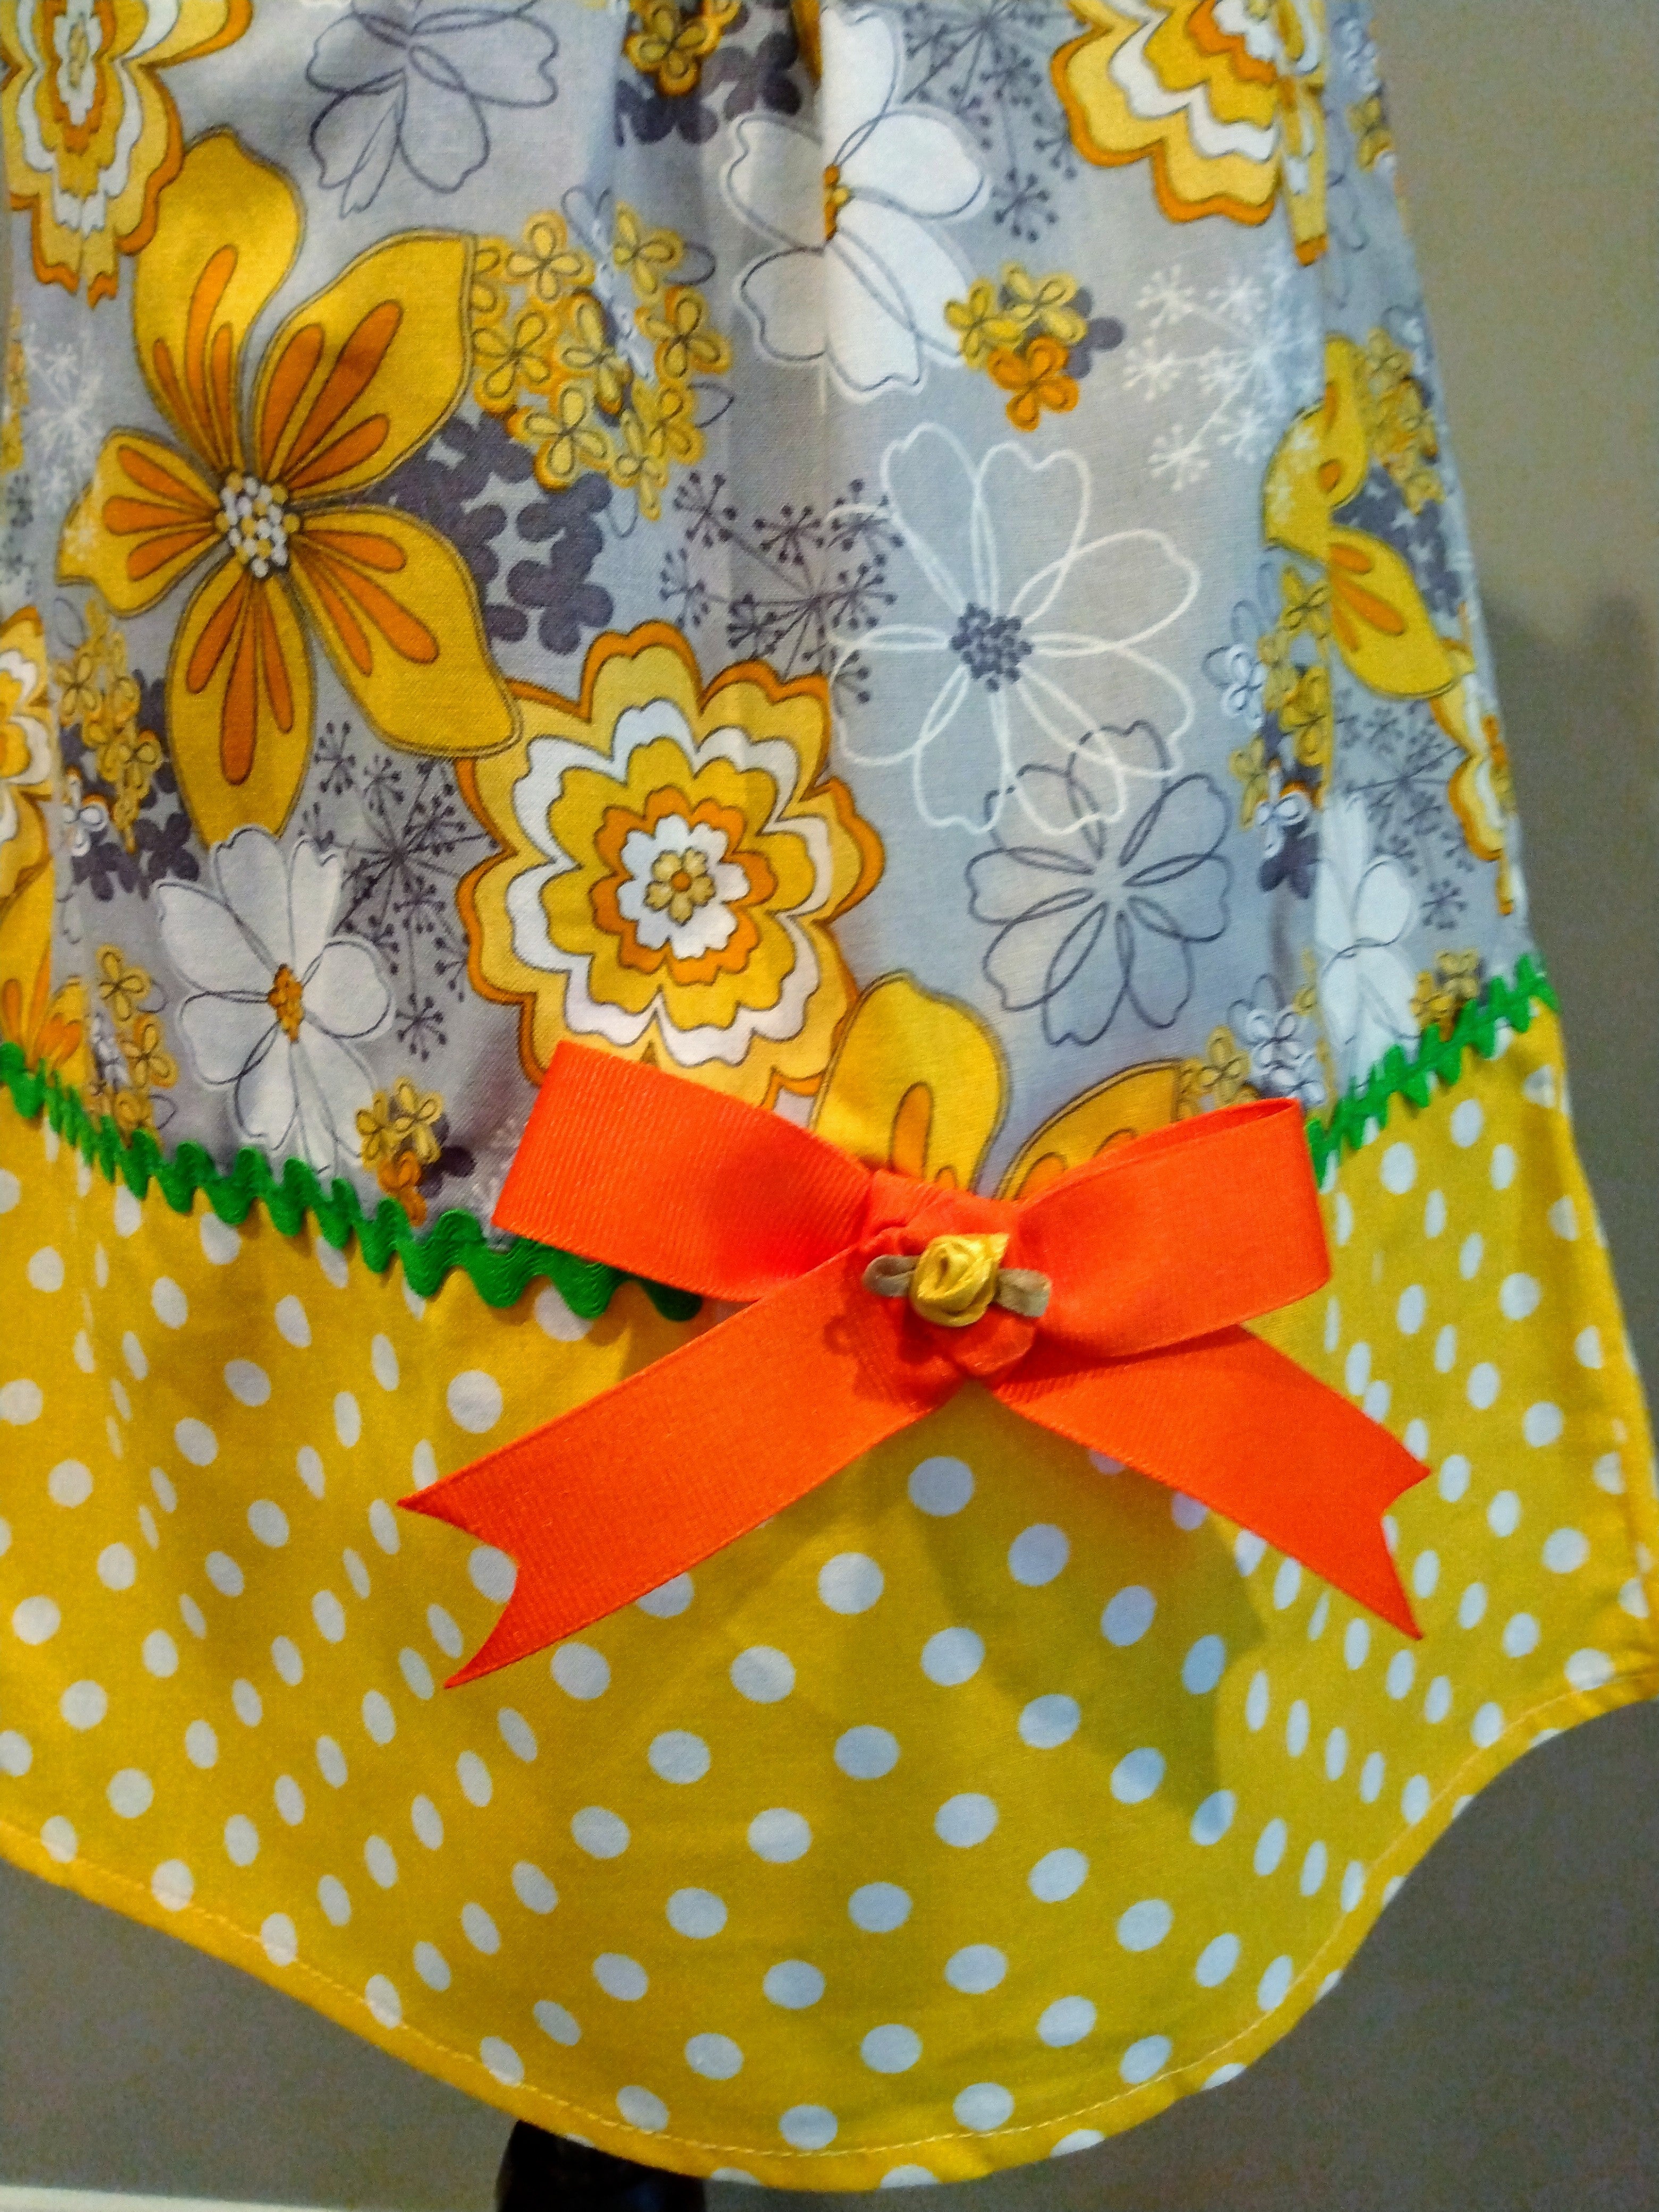 Handmade 100% Cotton Pillowcase Style Toddler Dress